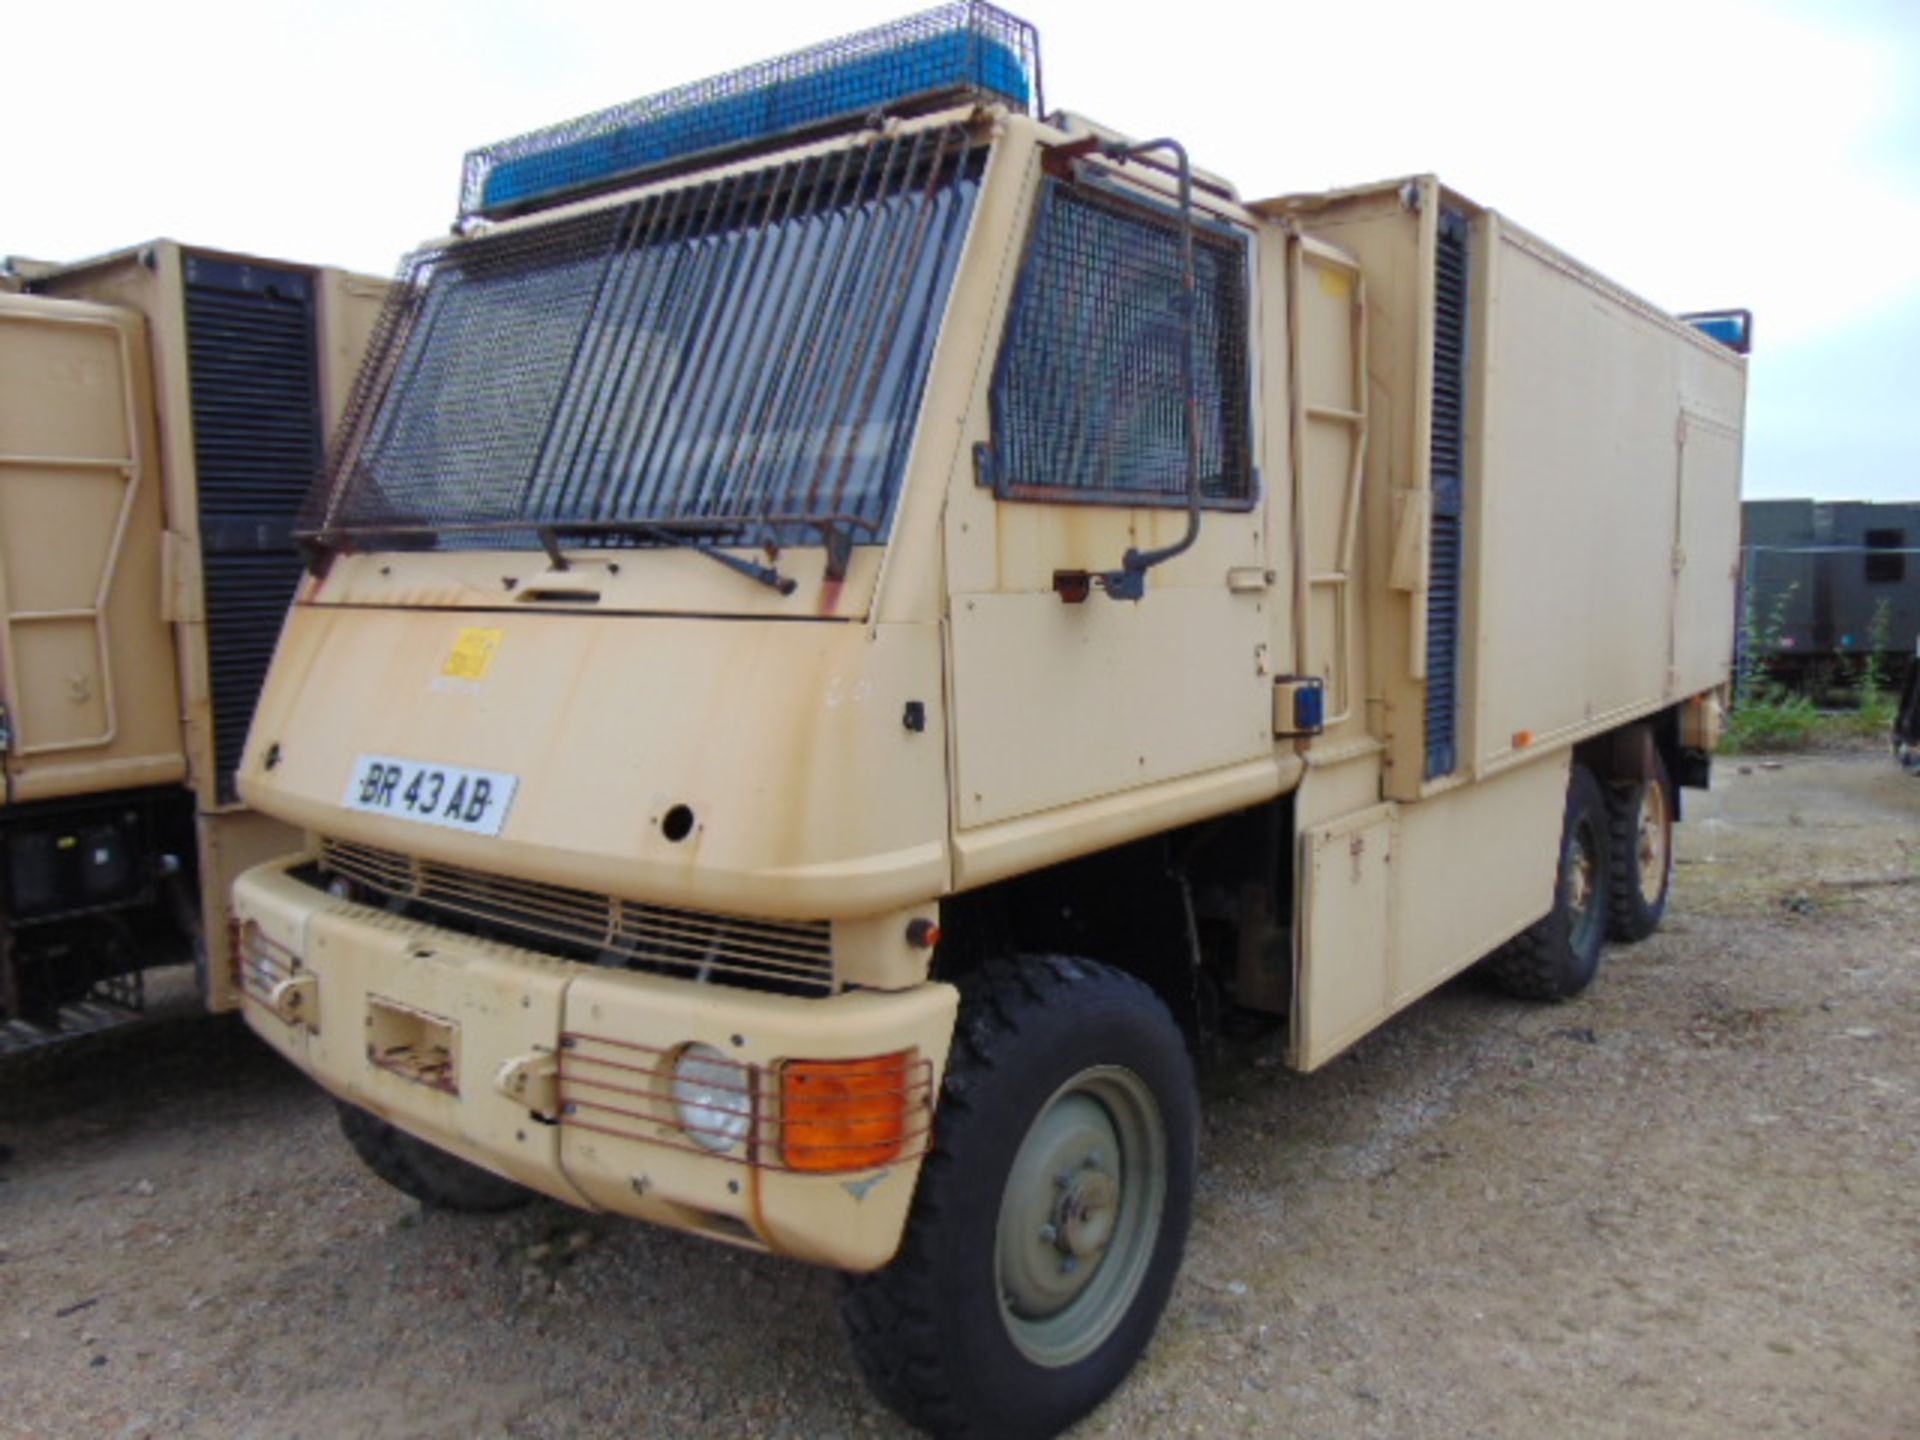 Mowag Bucher Duro II 6x6 High-Mobility Tactical Vehicle